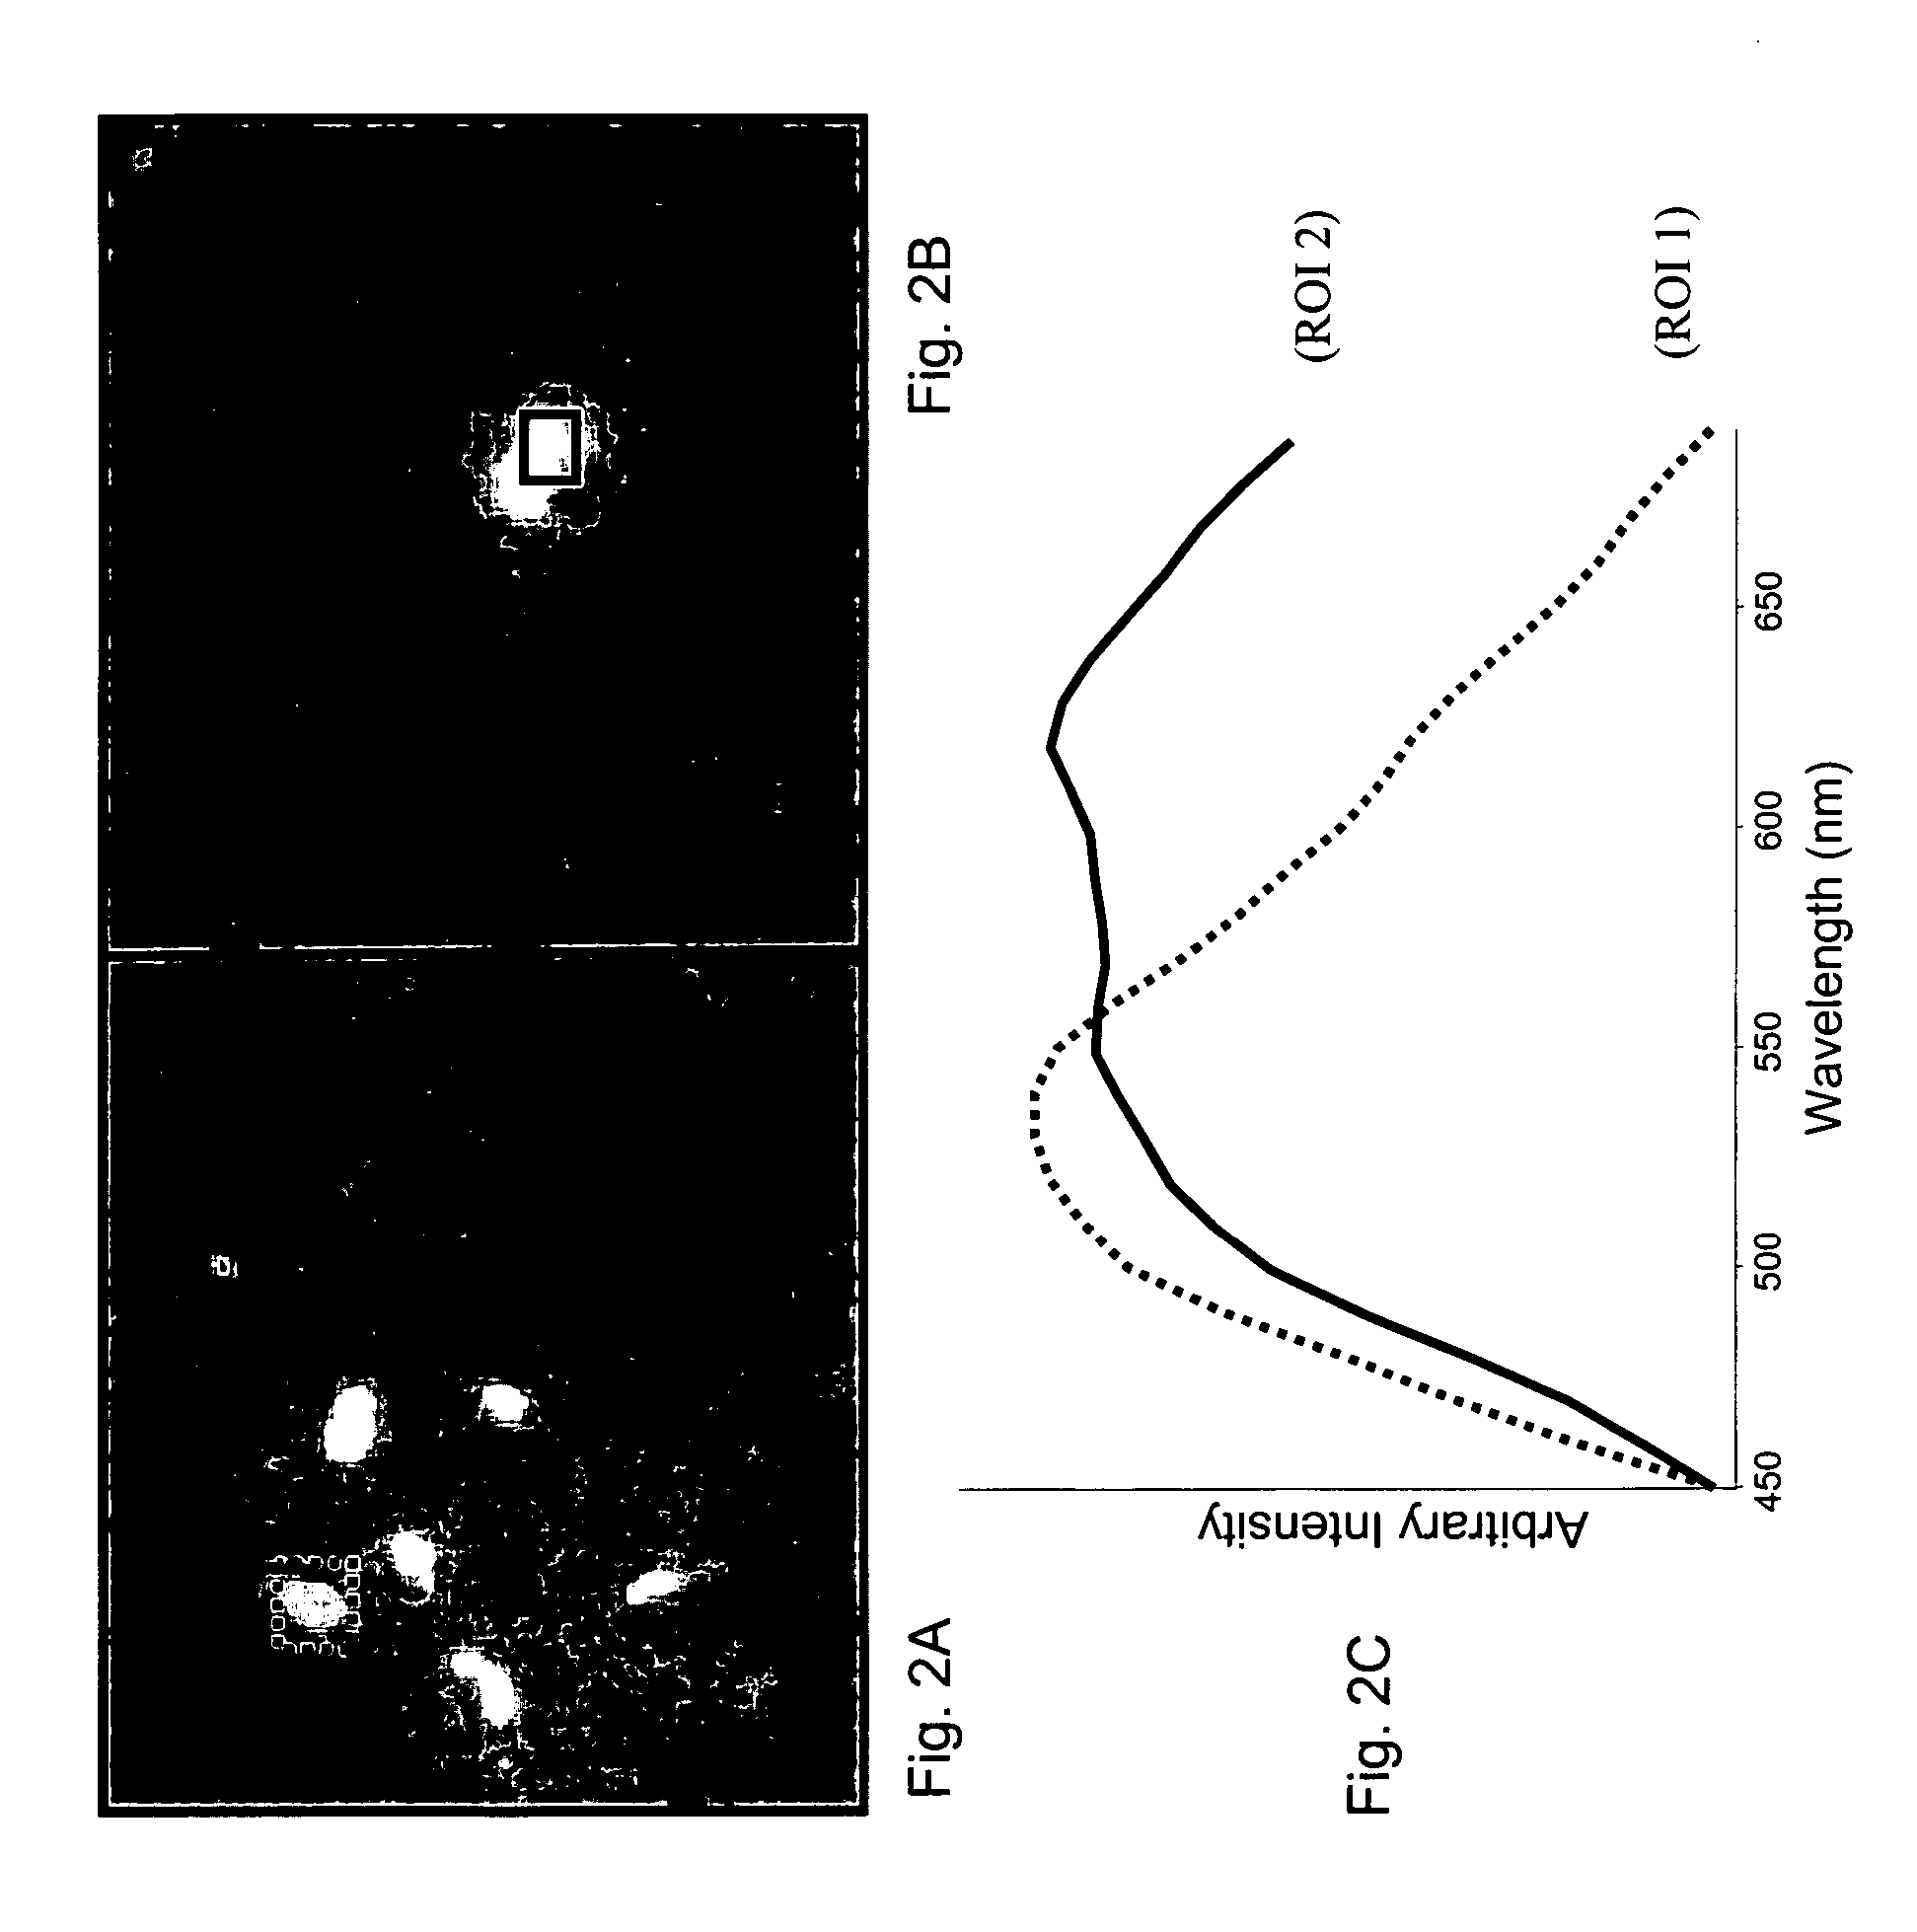 Raman spectral analysis of pathogens